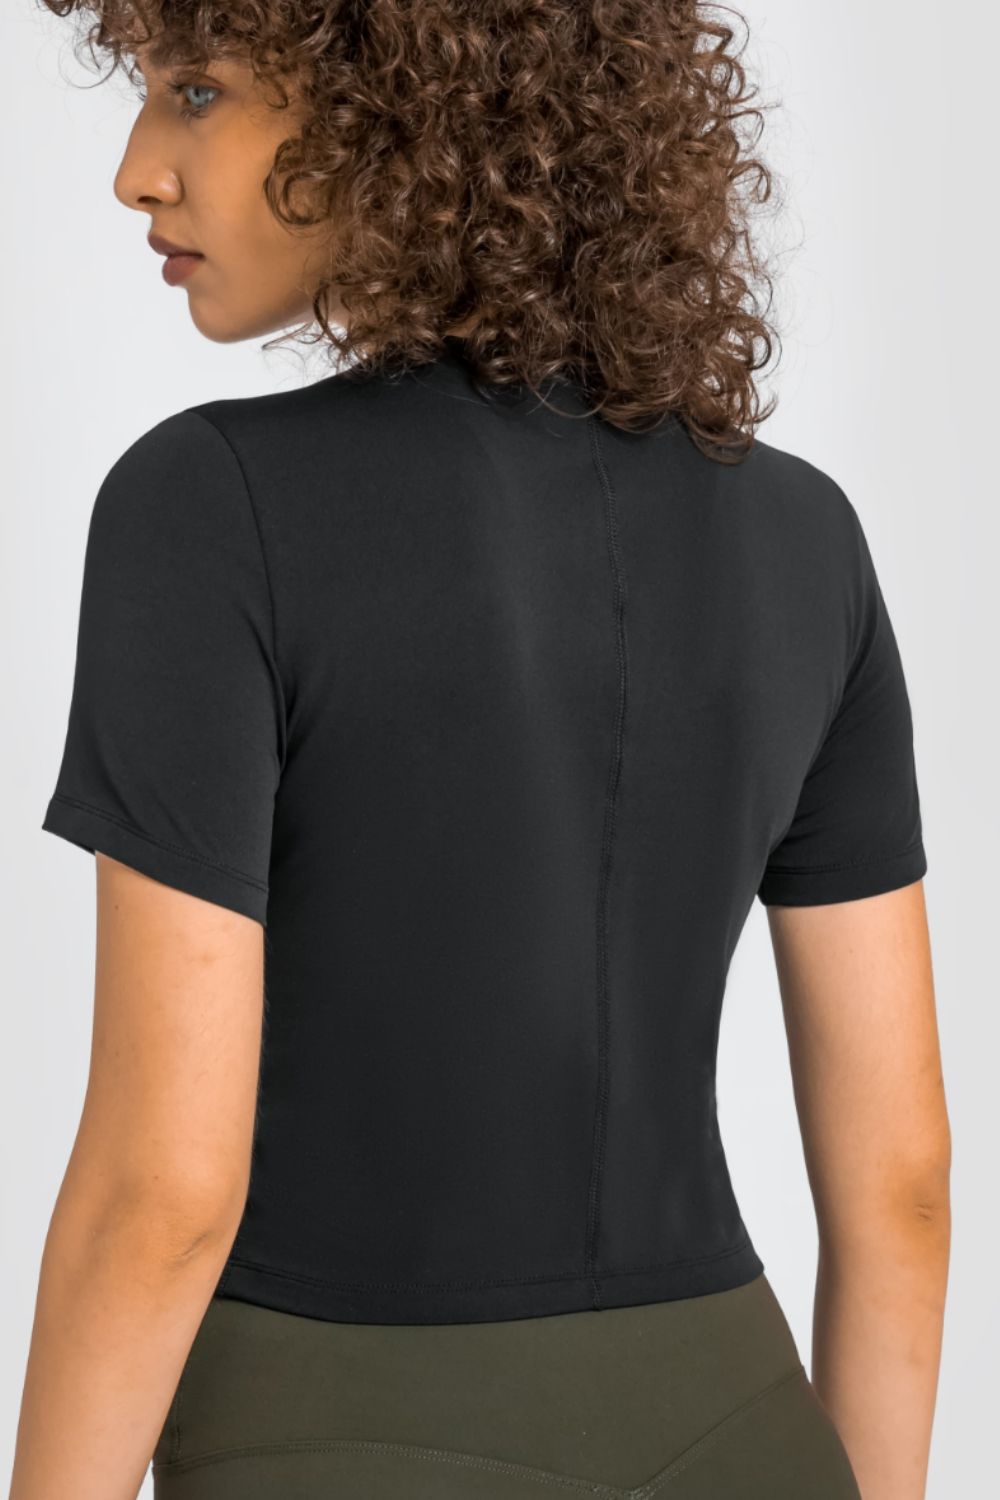 Round Neck Short Sleeve Yoga Tee Print on any thing USA/STOD clothes